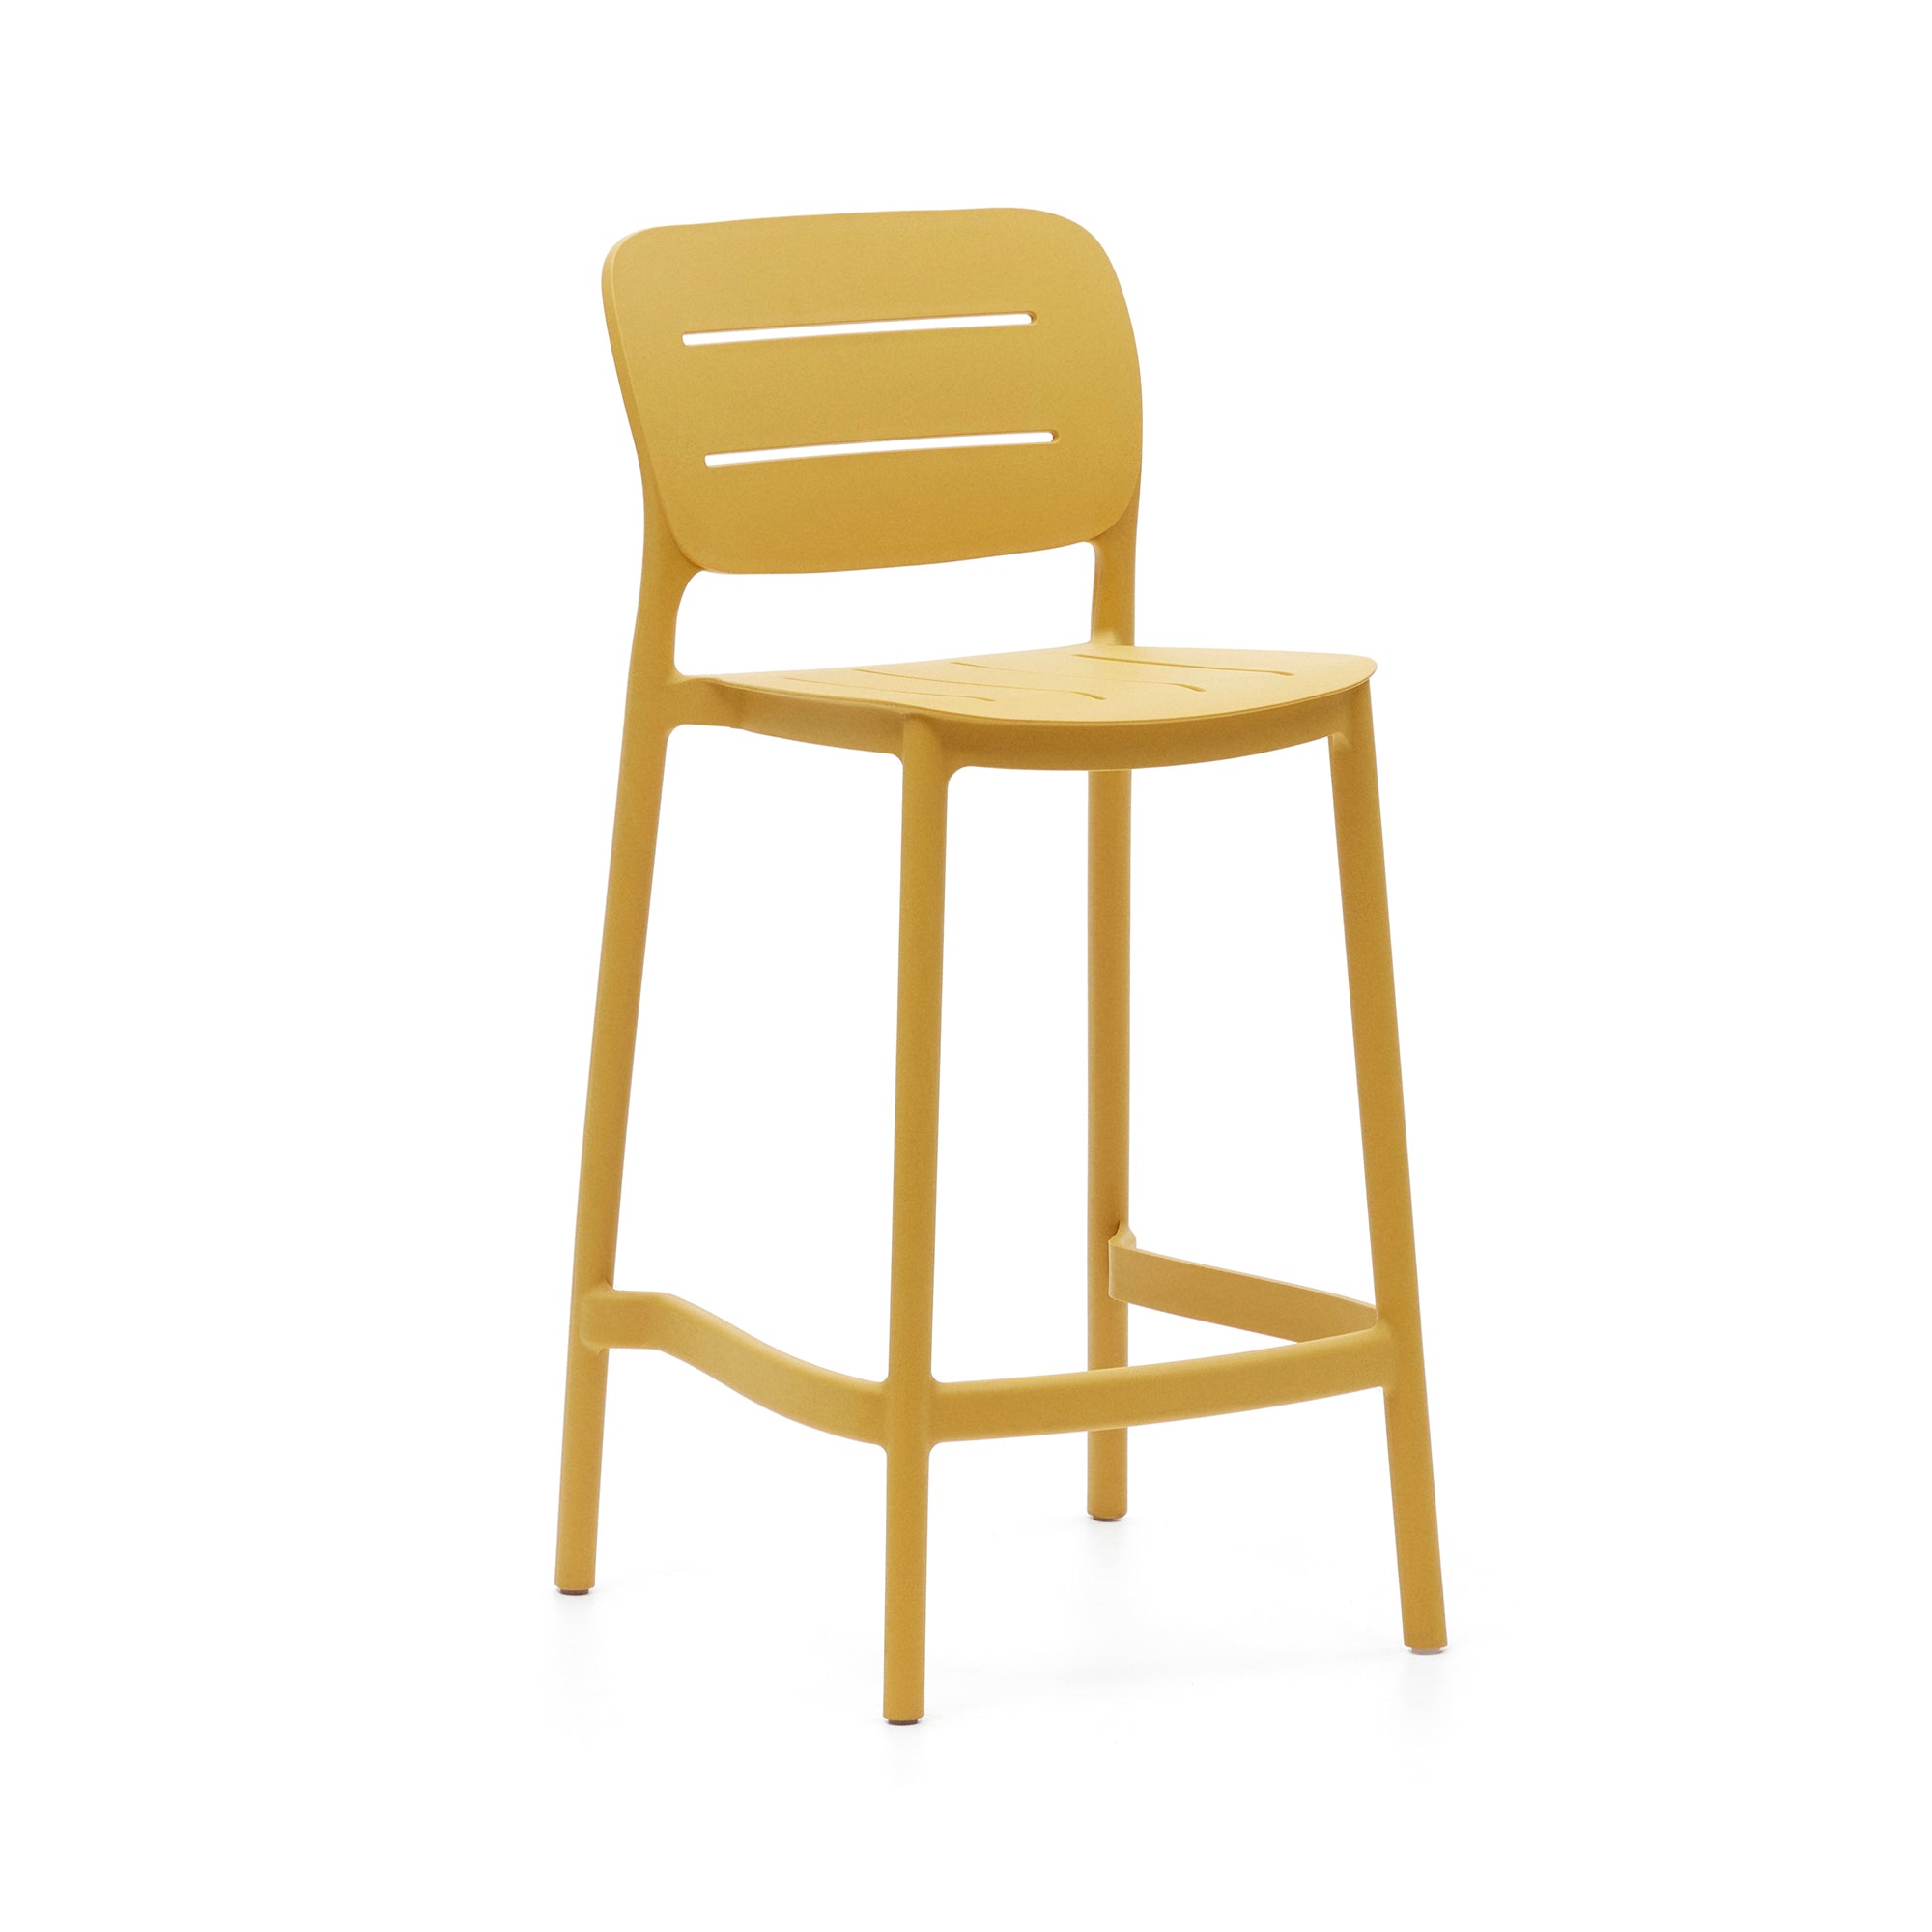 Morella stackable outdoor stool in mustard, 65 cm in height